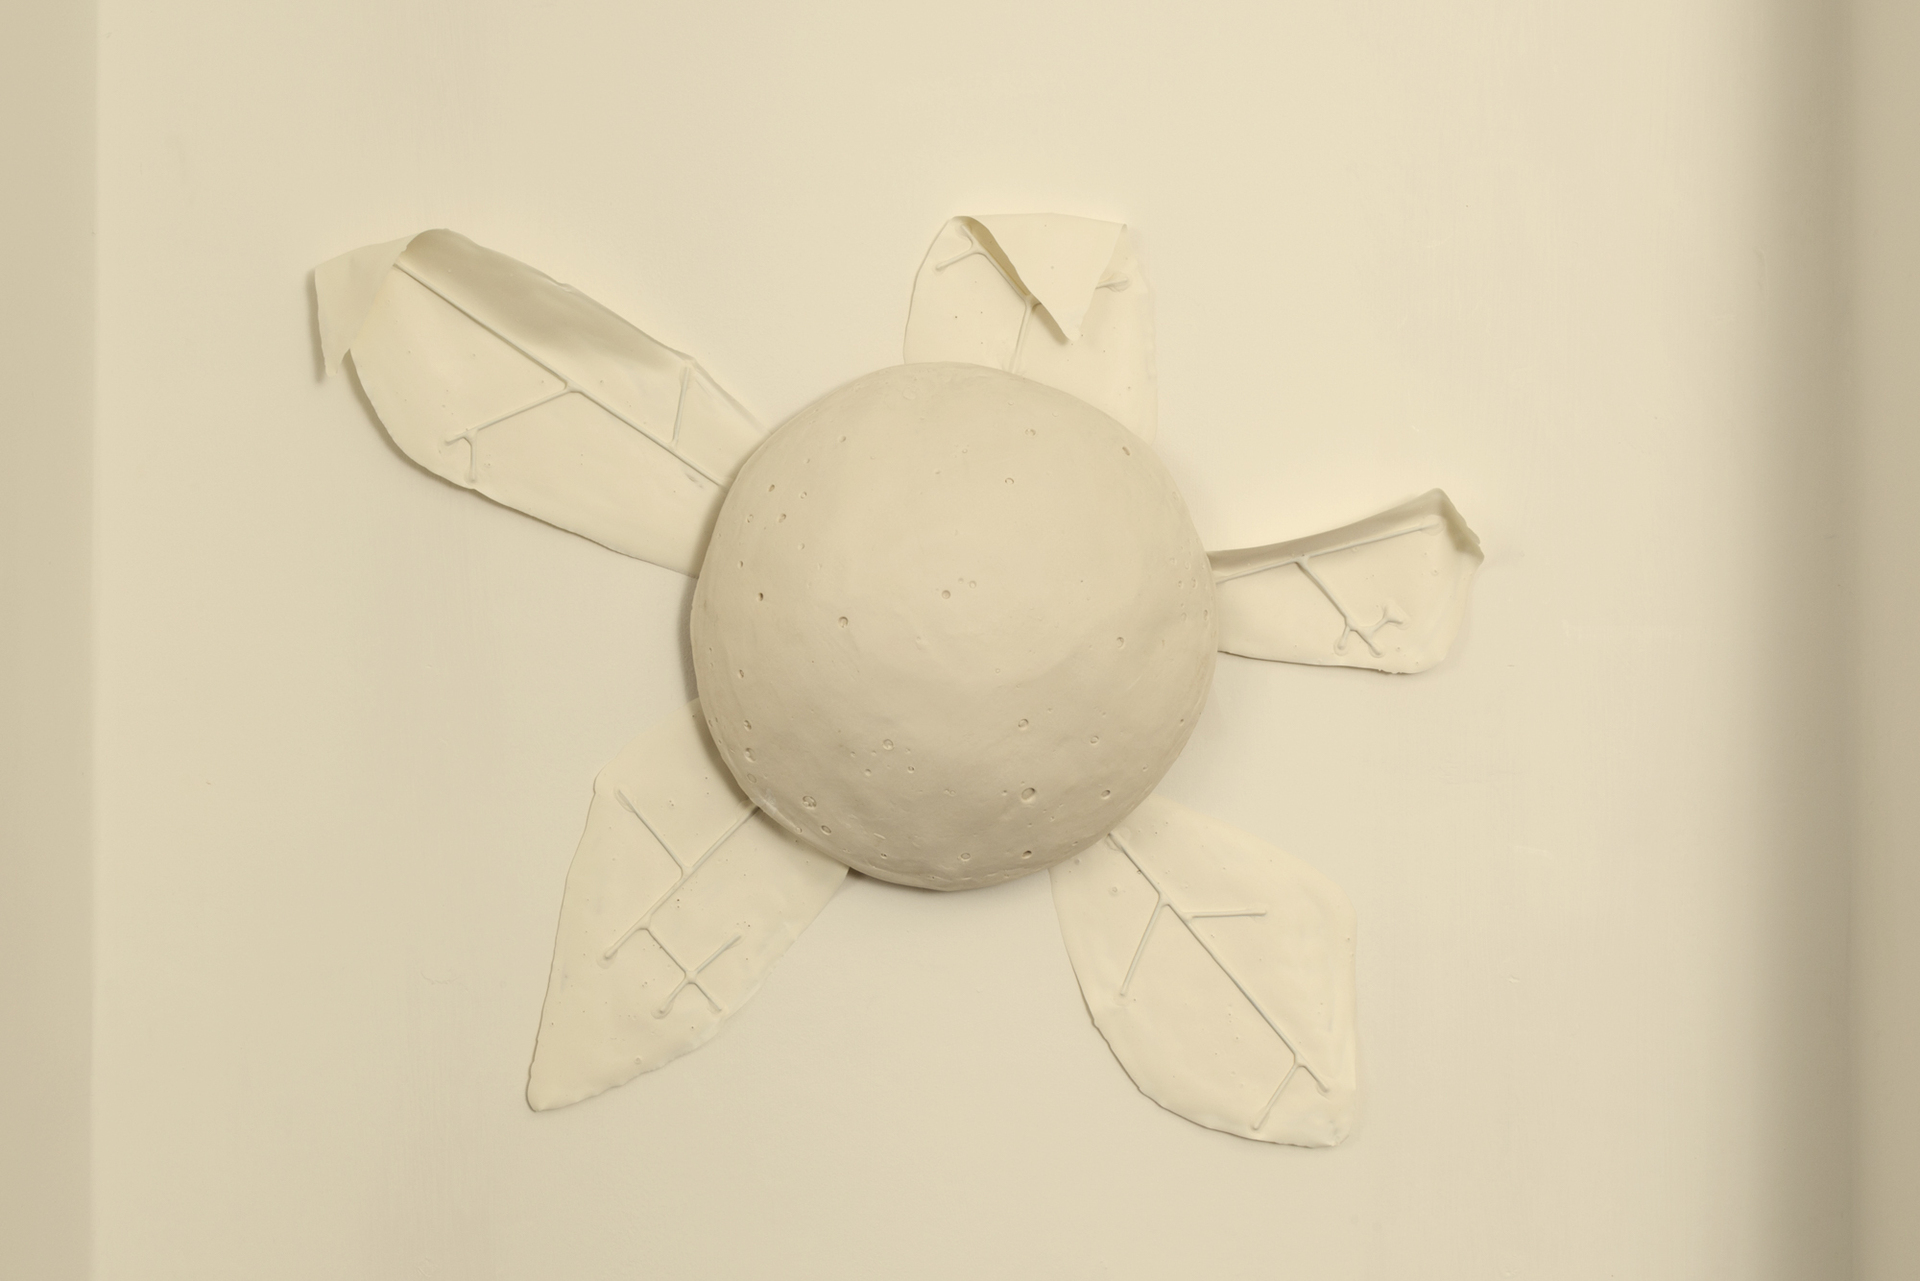 Sam Austen, New Moon, 2021, jesmonite, fibreglass, latex, steel wire, 50cm x 60cm x